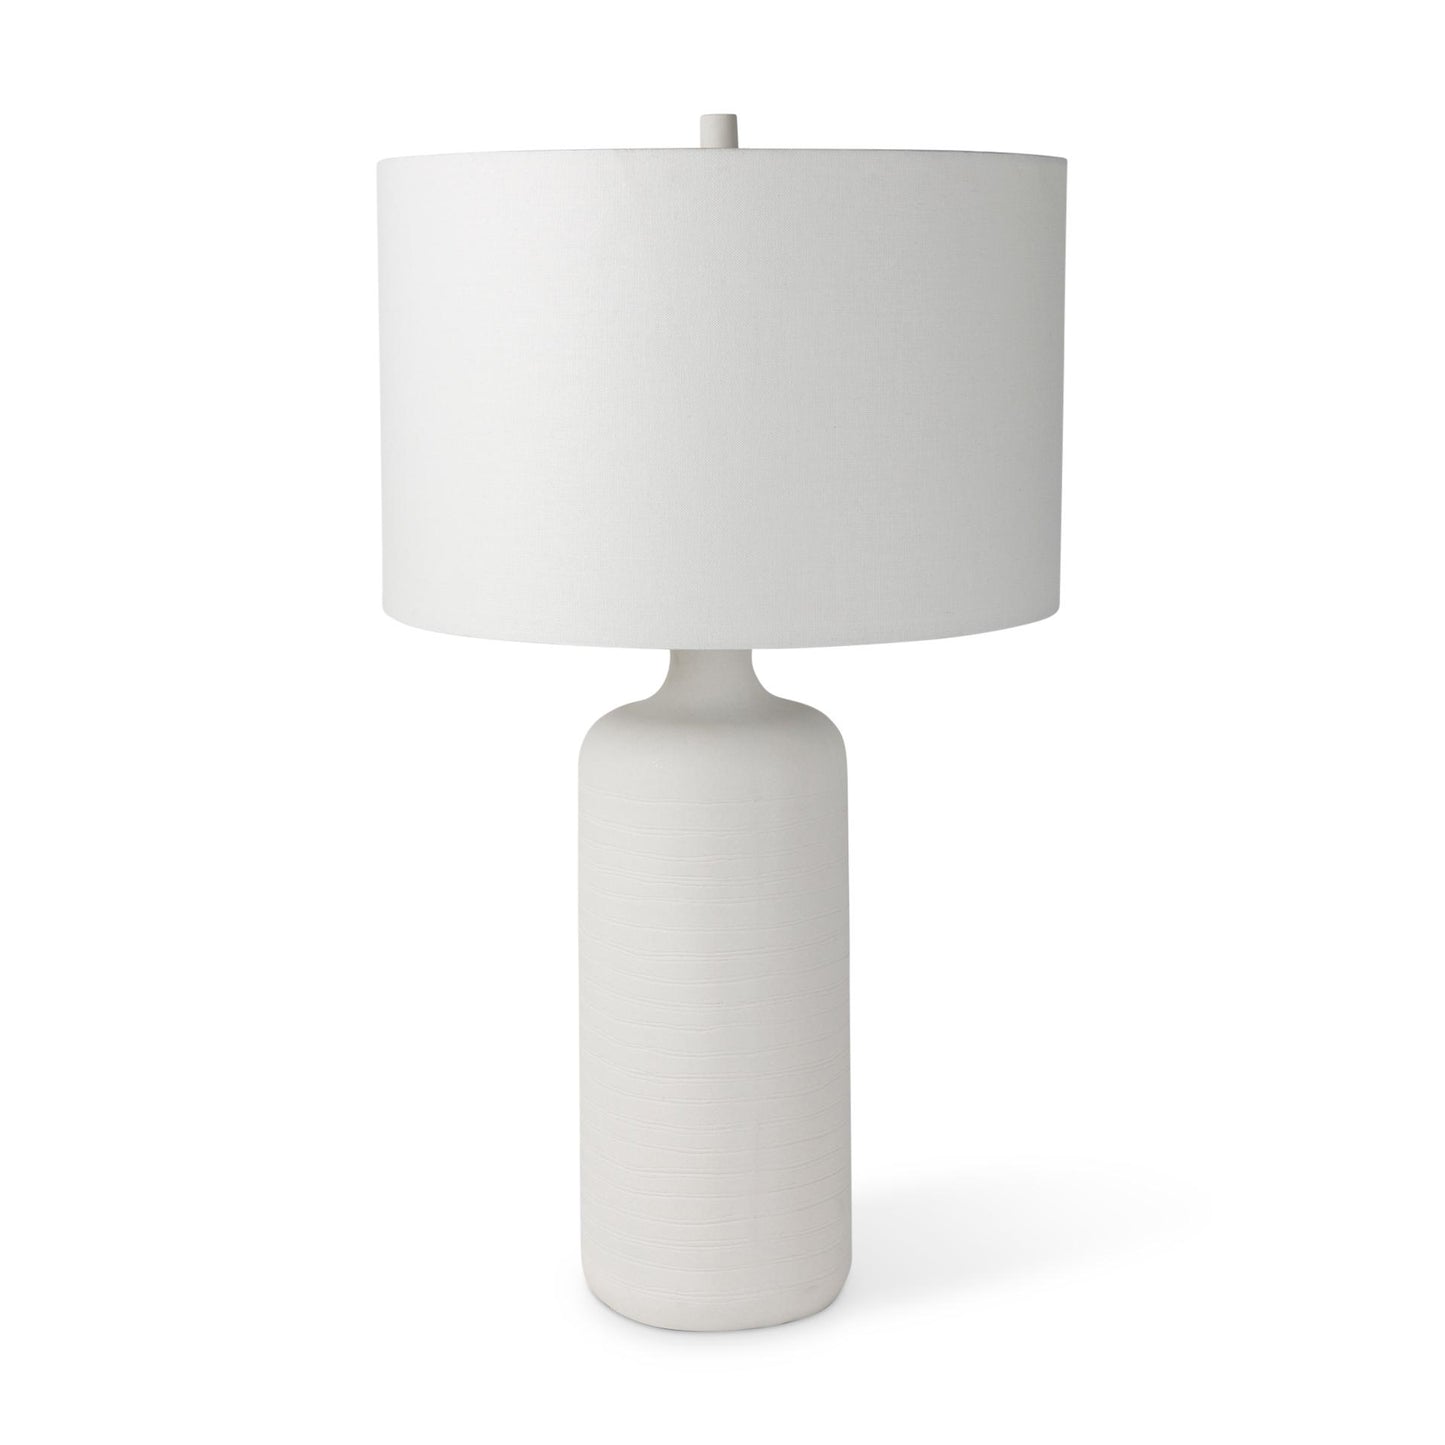 Melanie 17.0L x 17.0W x 30.5H White Shade W/White Base Table Lamp